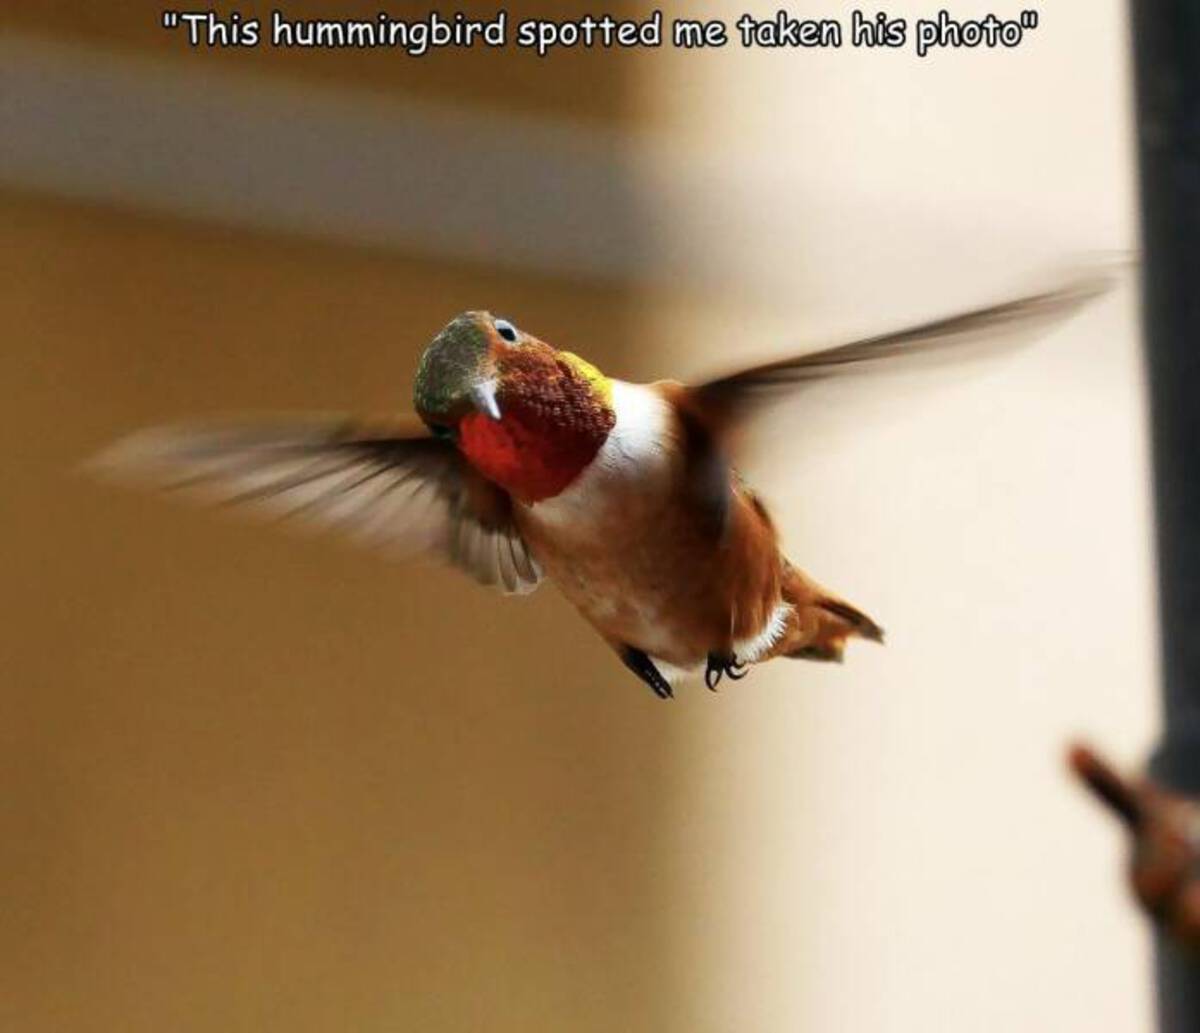 Hummingbirds - "This hummingbird spotted me taken his photo"